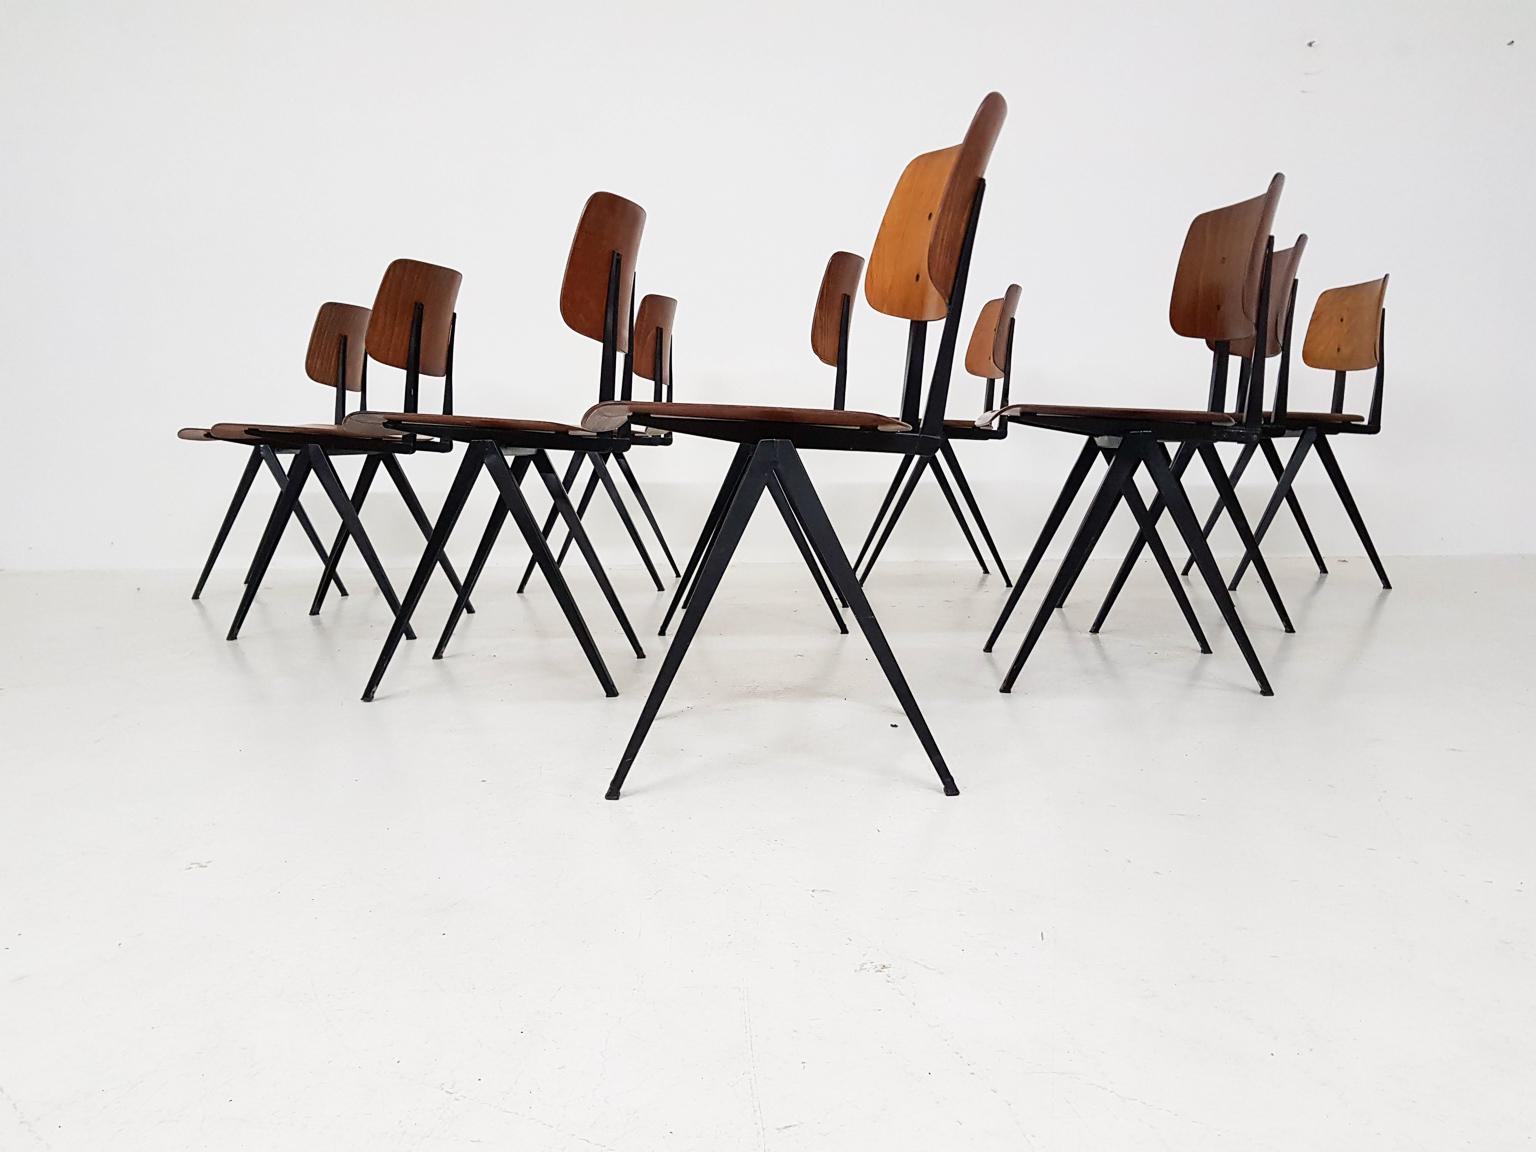 20th Century Set of 10 Galavanitas S16 Industrial Plywood School Chairs, Dutch Design, 1960s